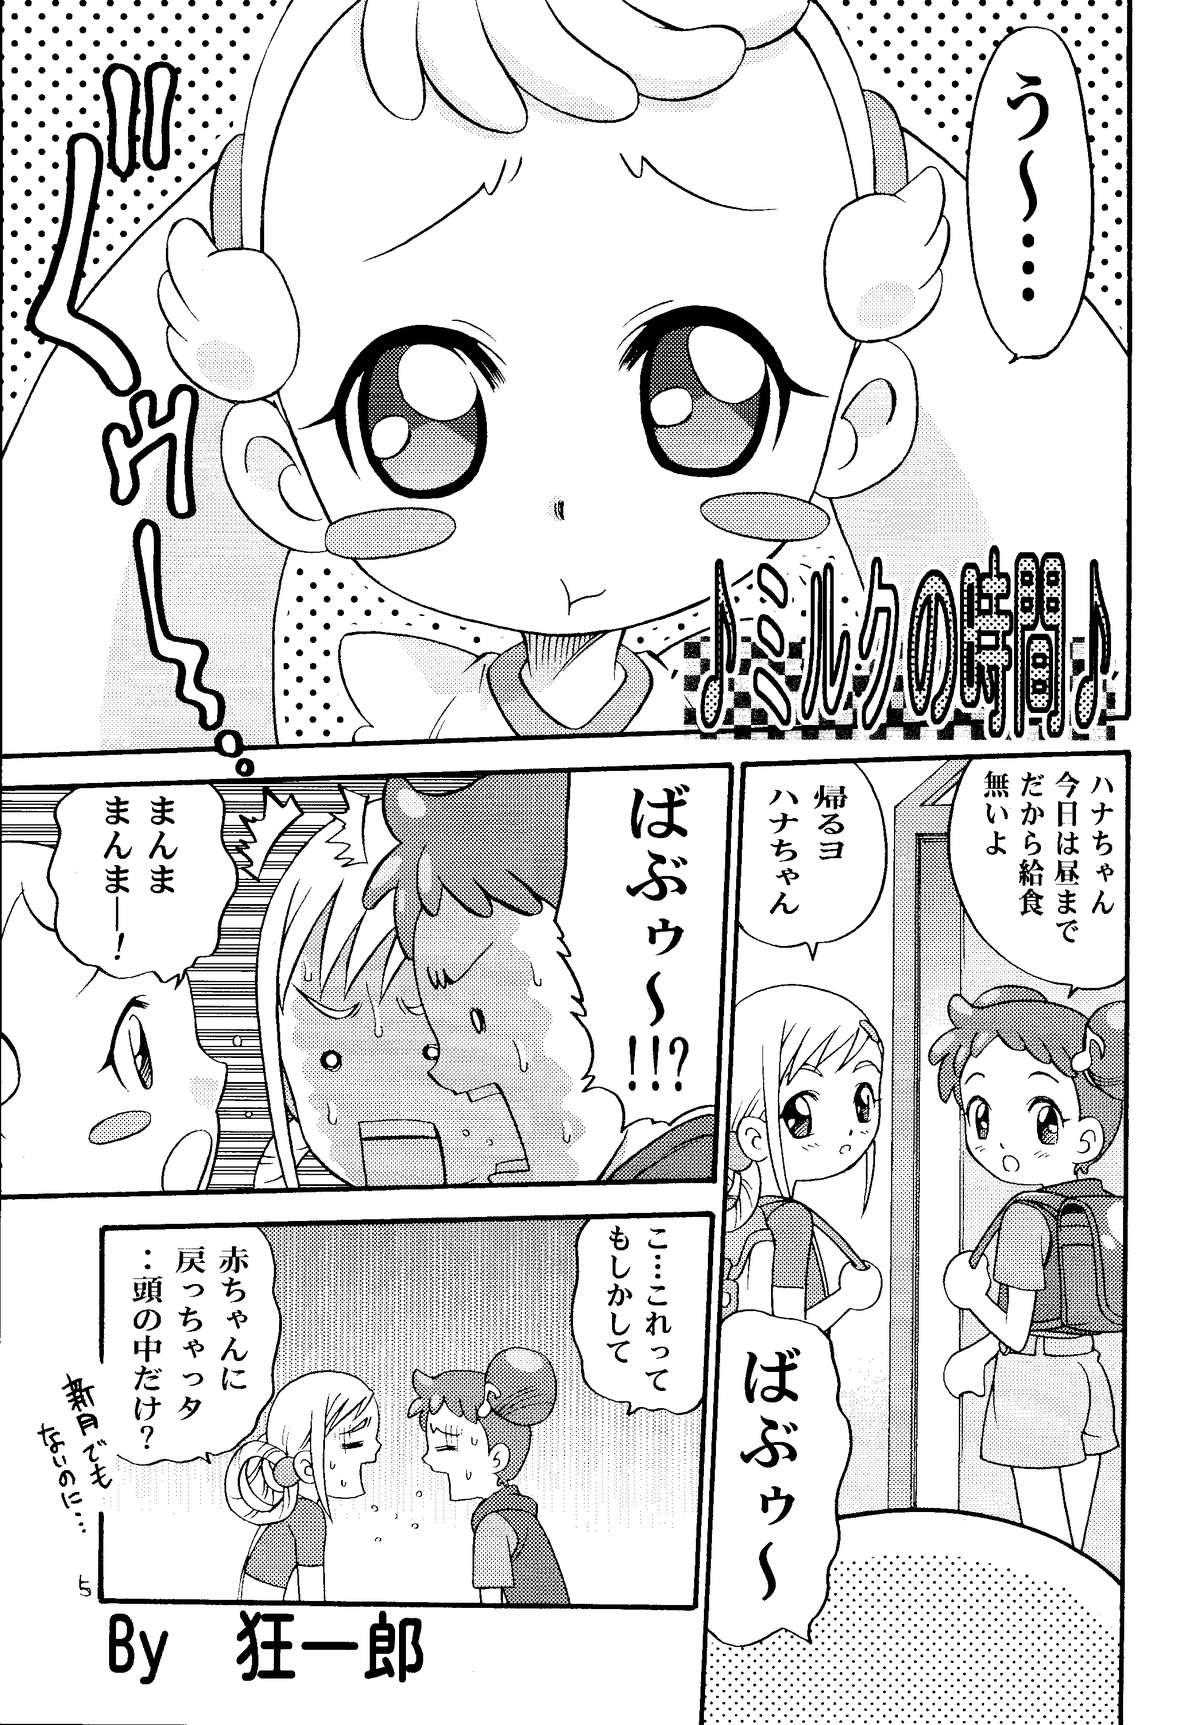 Petite Ohanami - Ojamajo doremi Street - Page 4